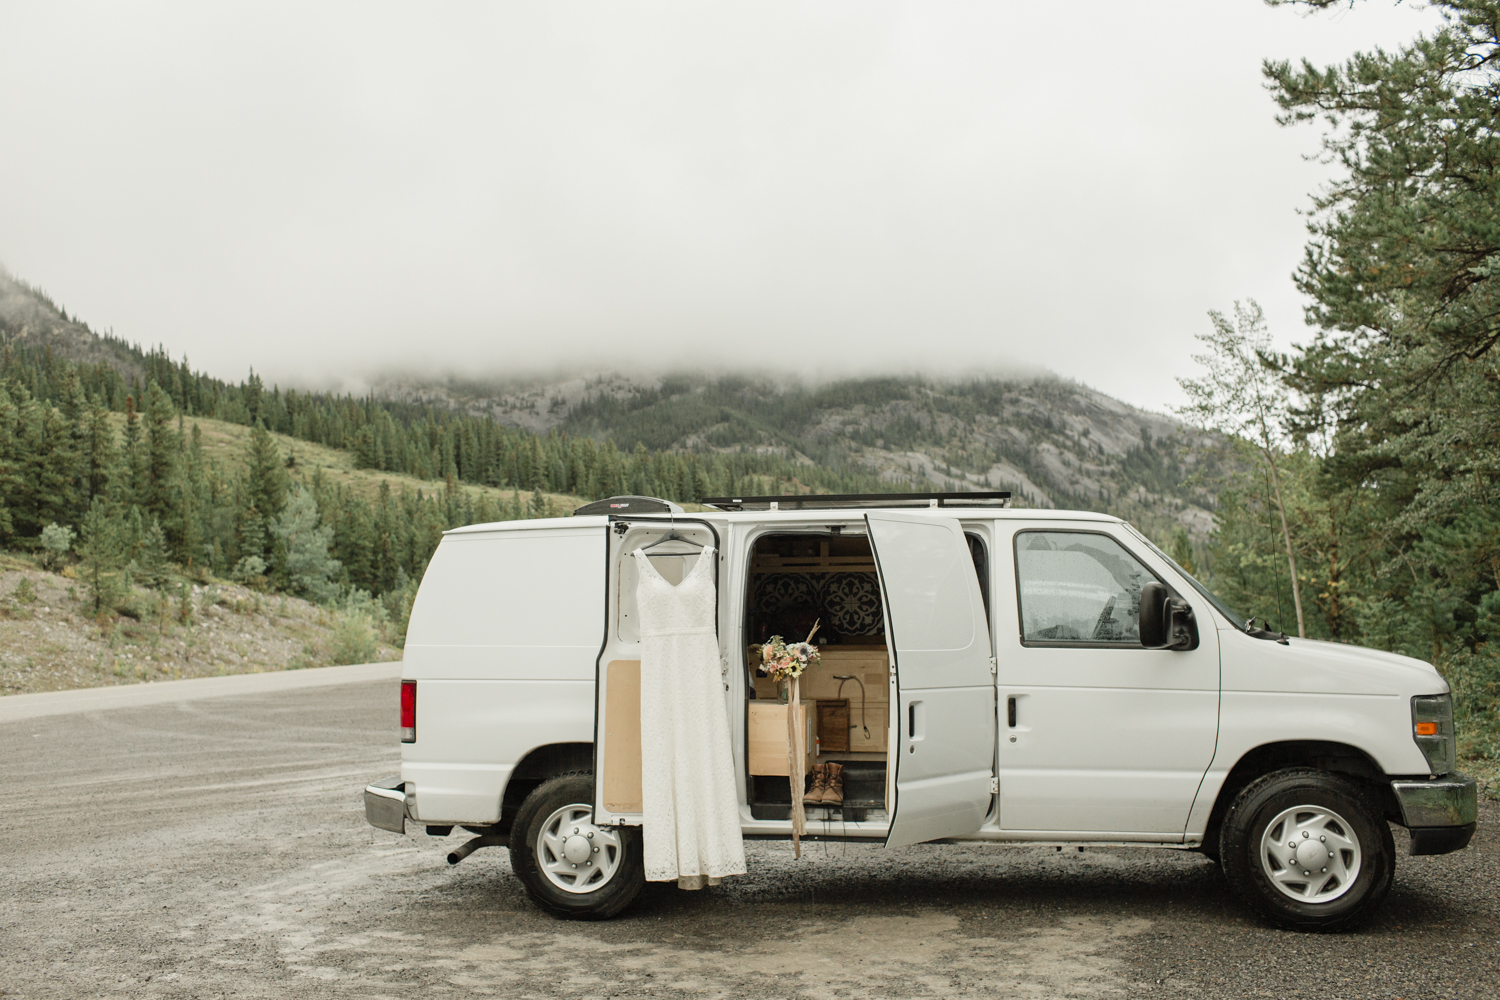 A camper van near Banff